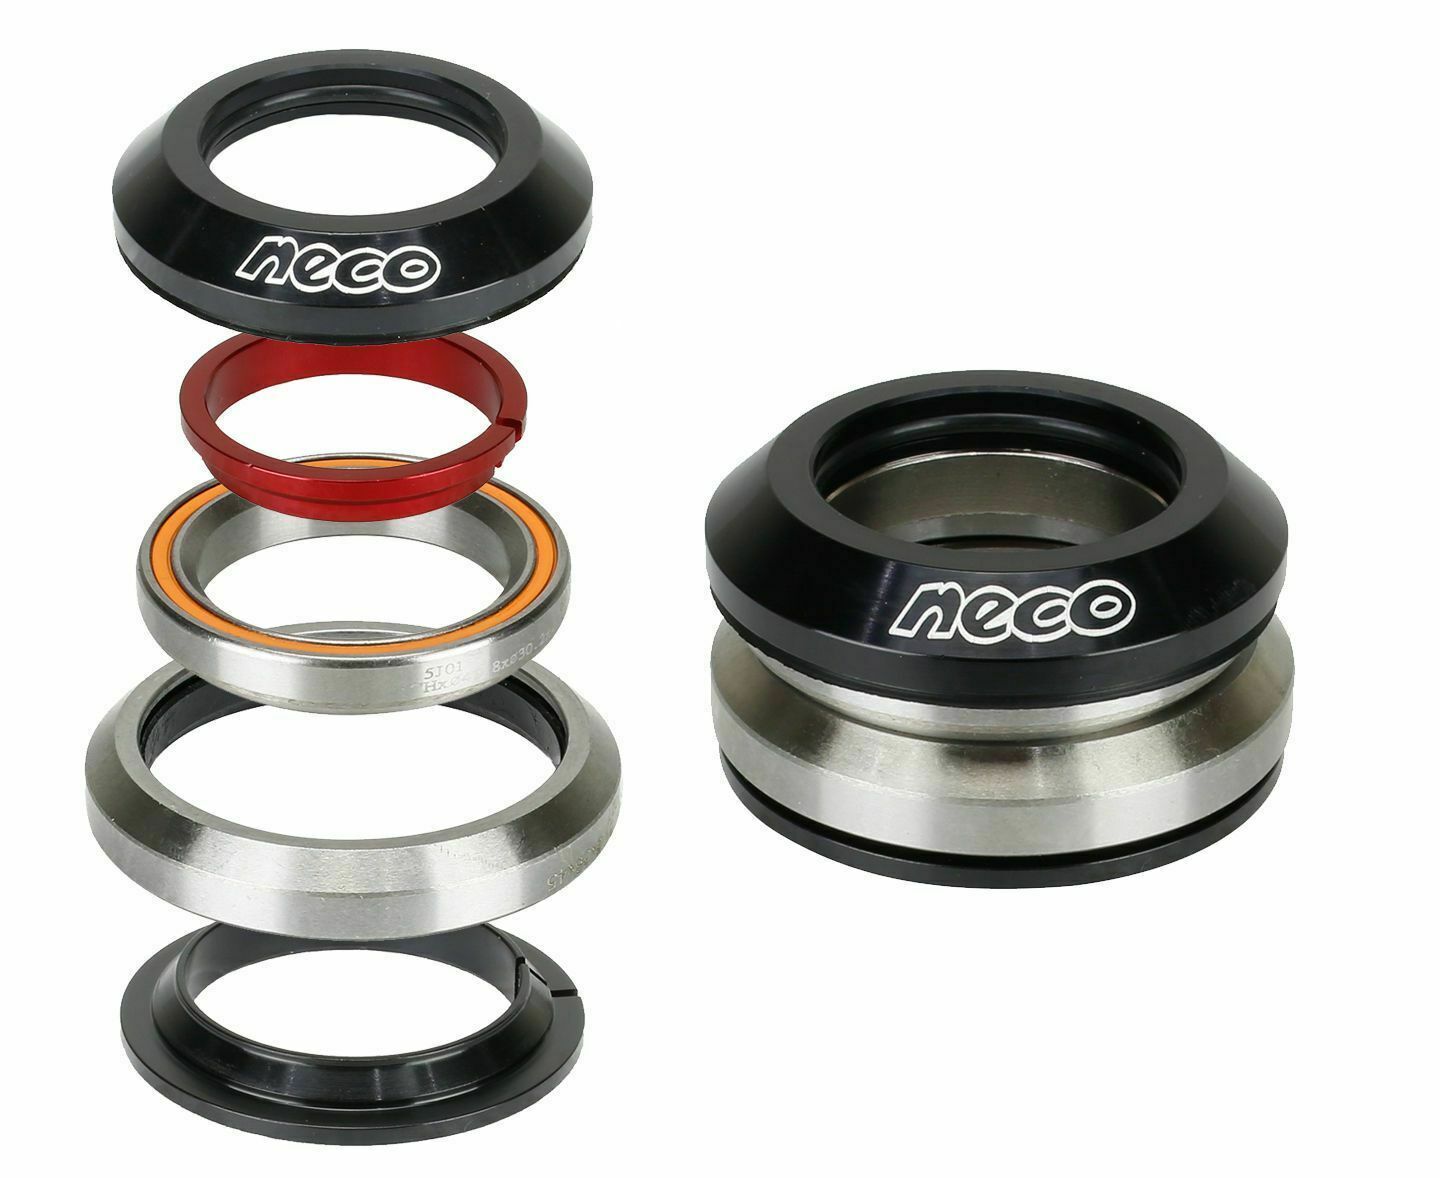 NECO Bike CNC Headset 1-1/8" Bearing